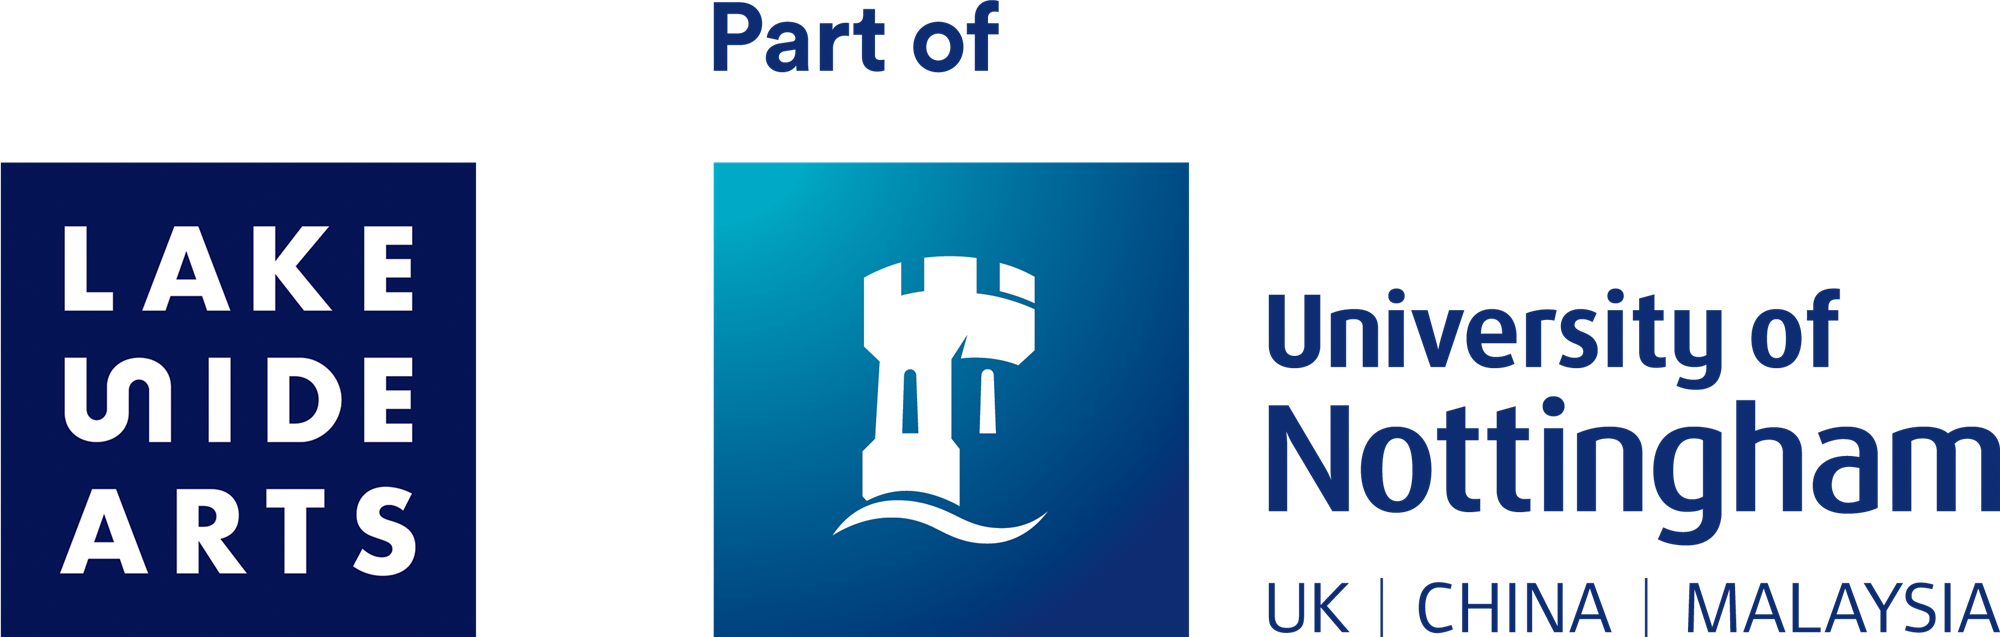 LSA and UoN logo